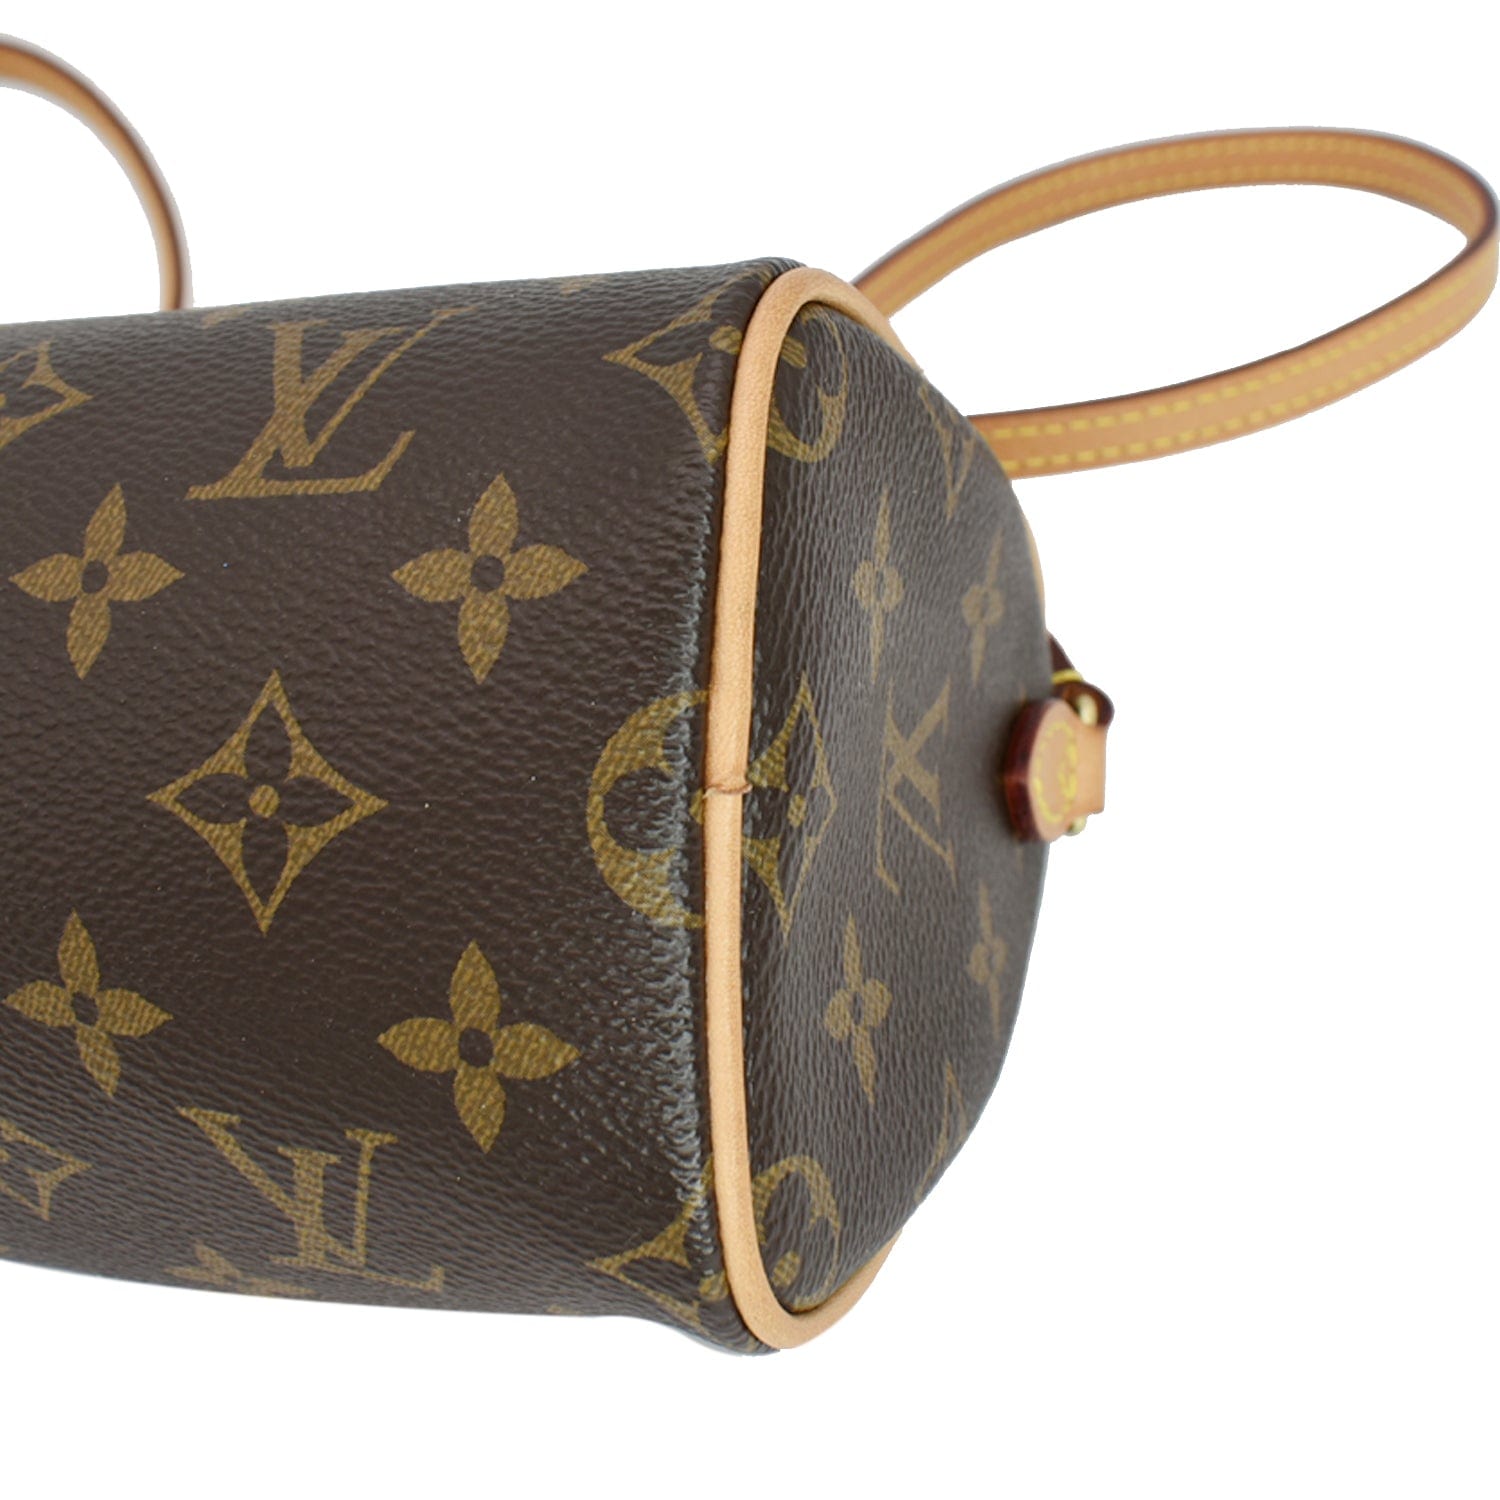 Vintage Louis Vuitton Nano Speedy Shoulder Bag Hand Bag 